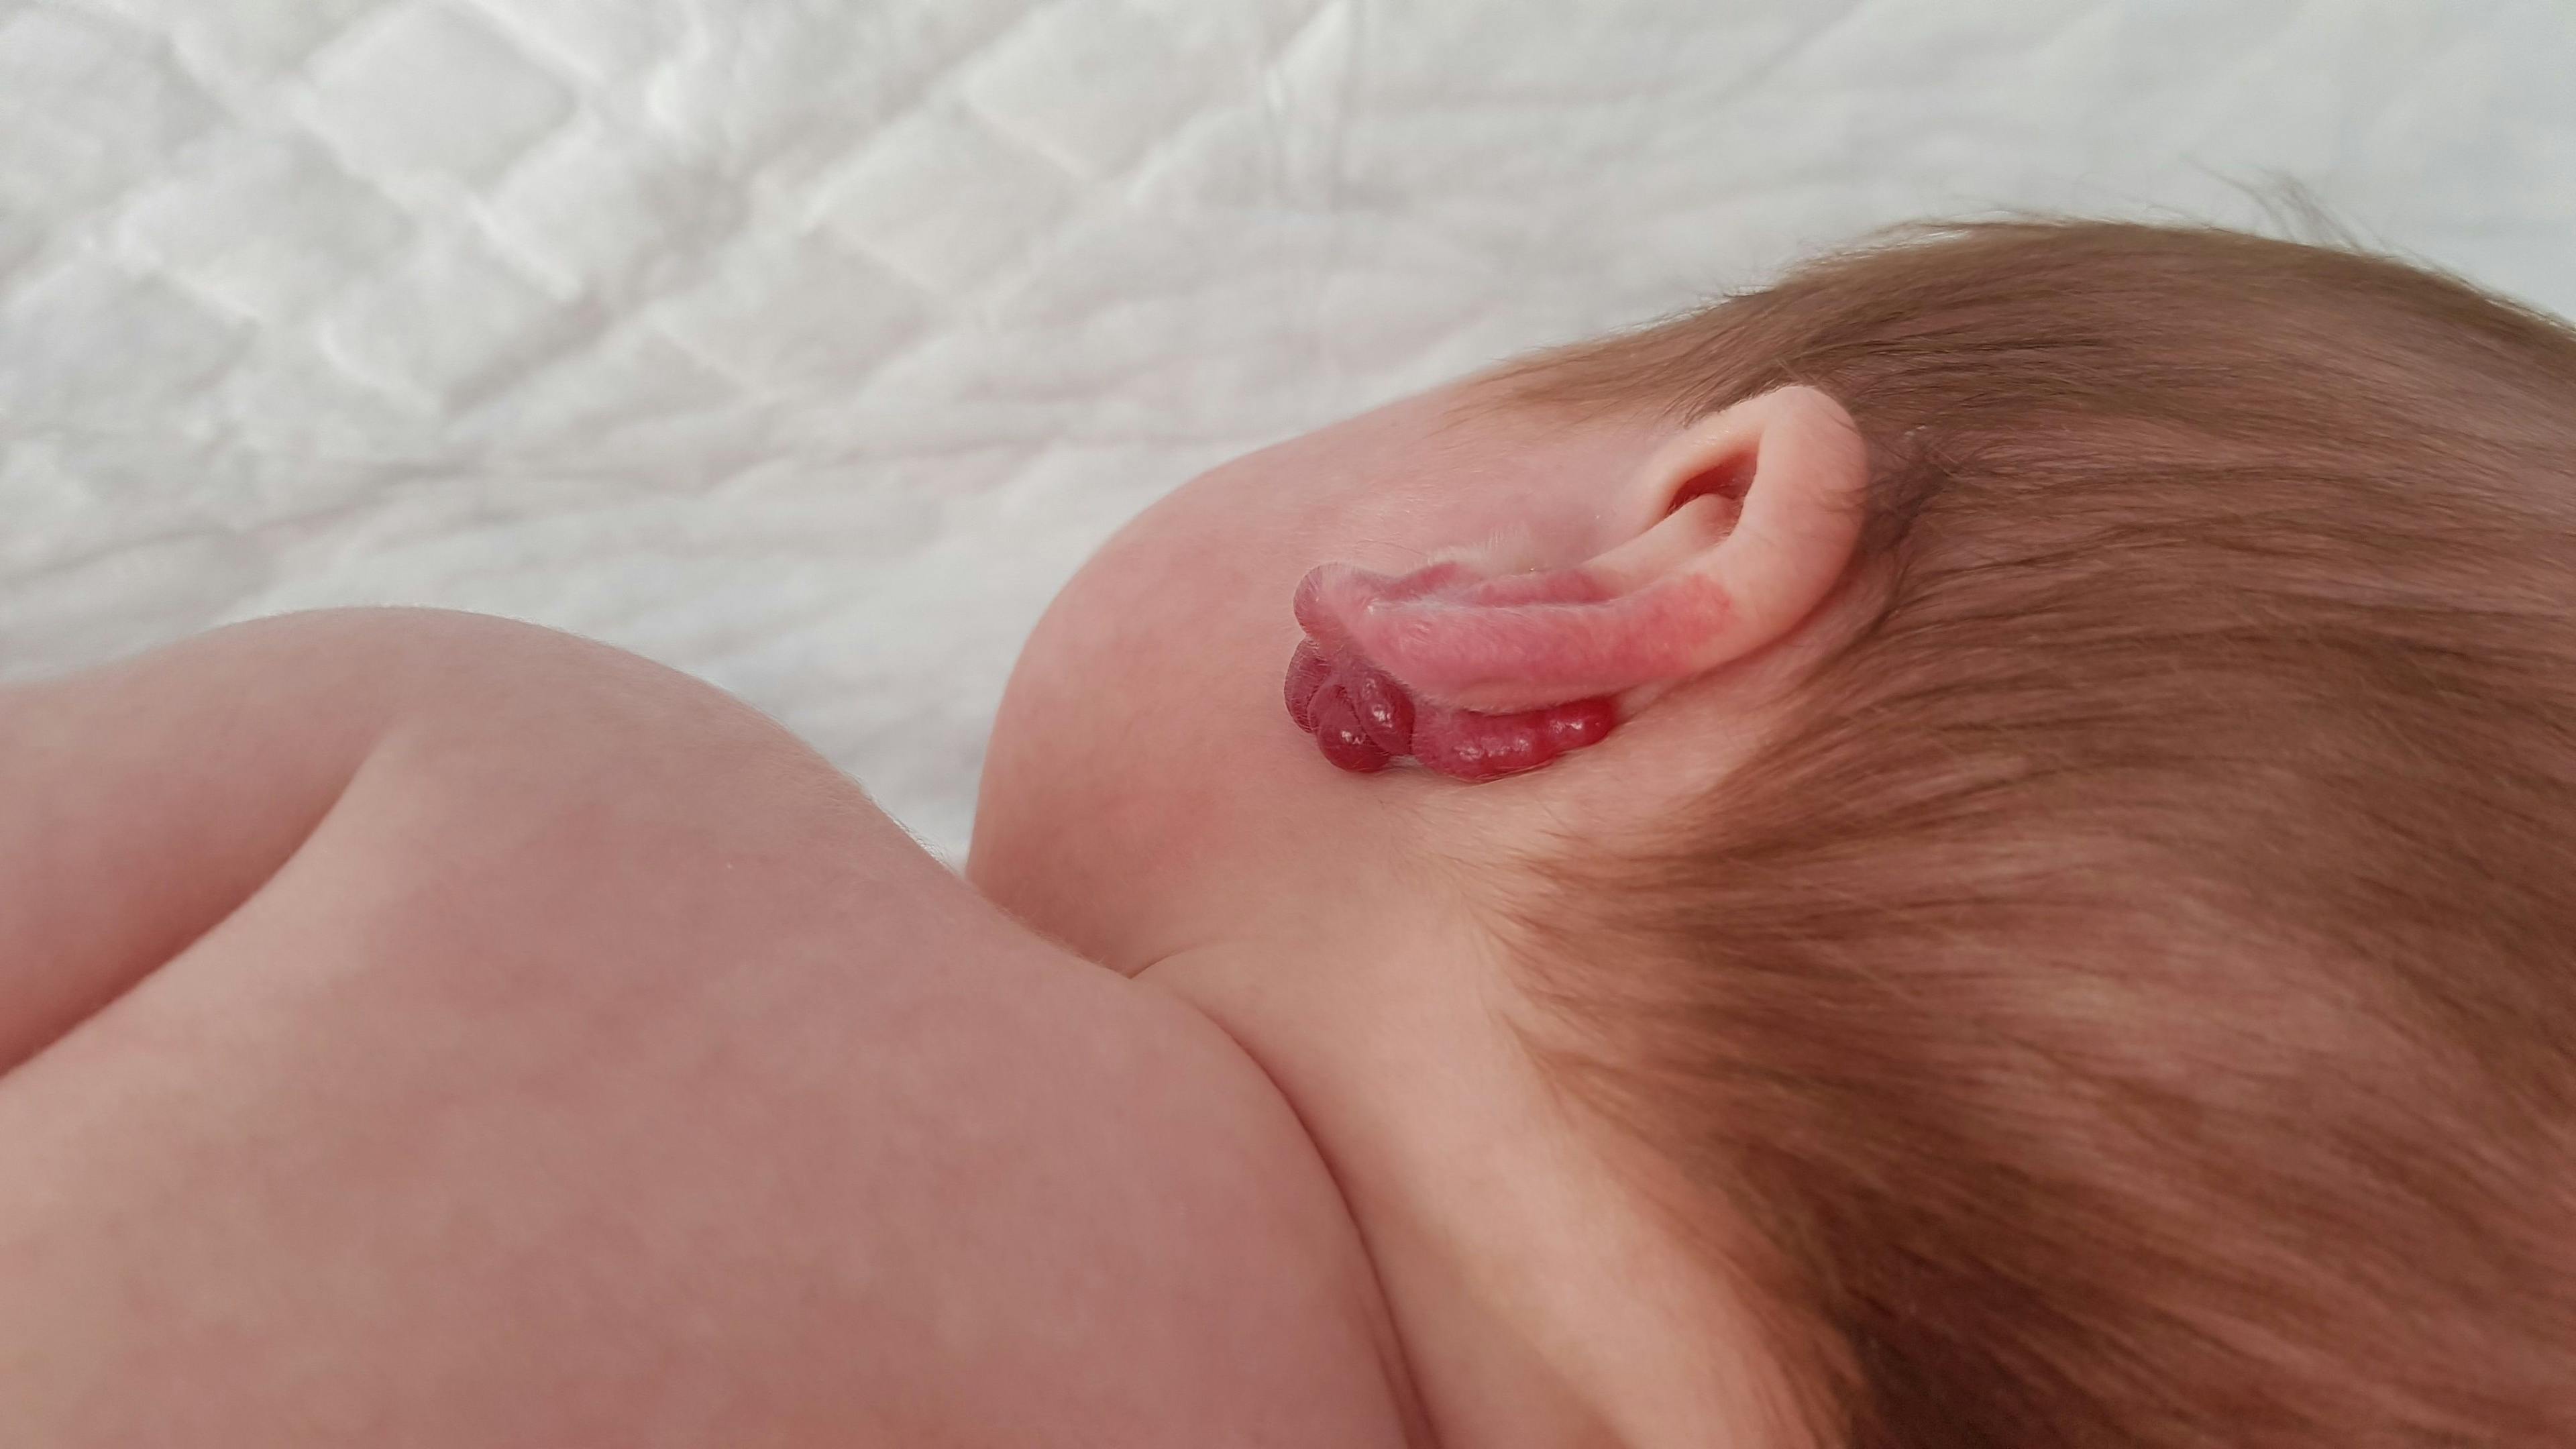 Severe Hemorrhage from Infantile Hemangioma